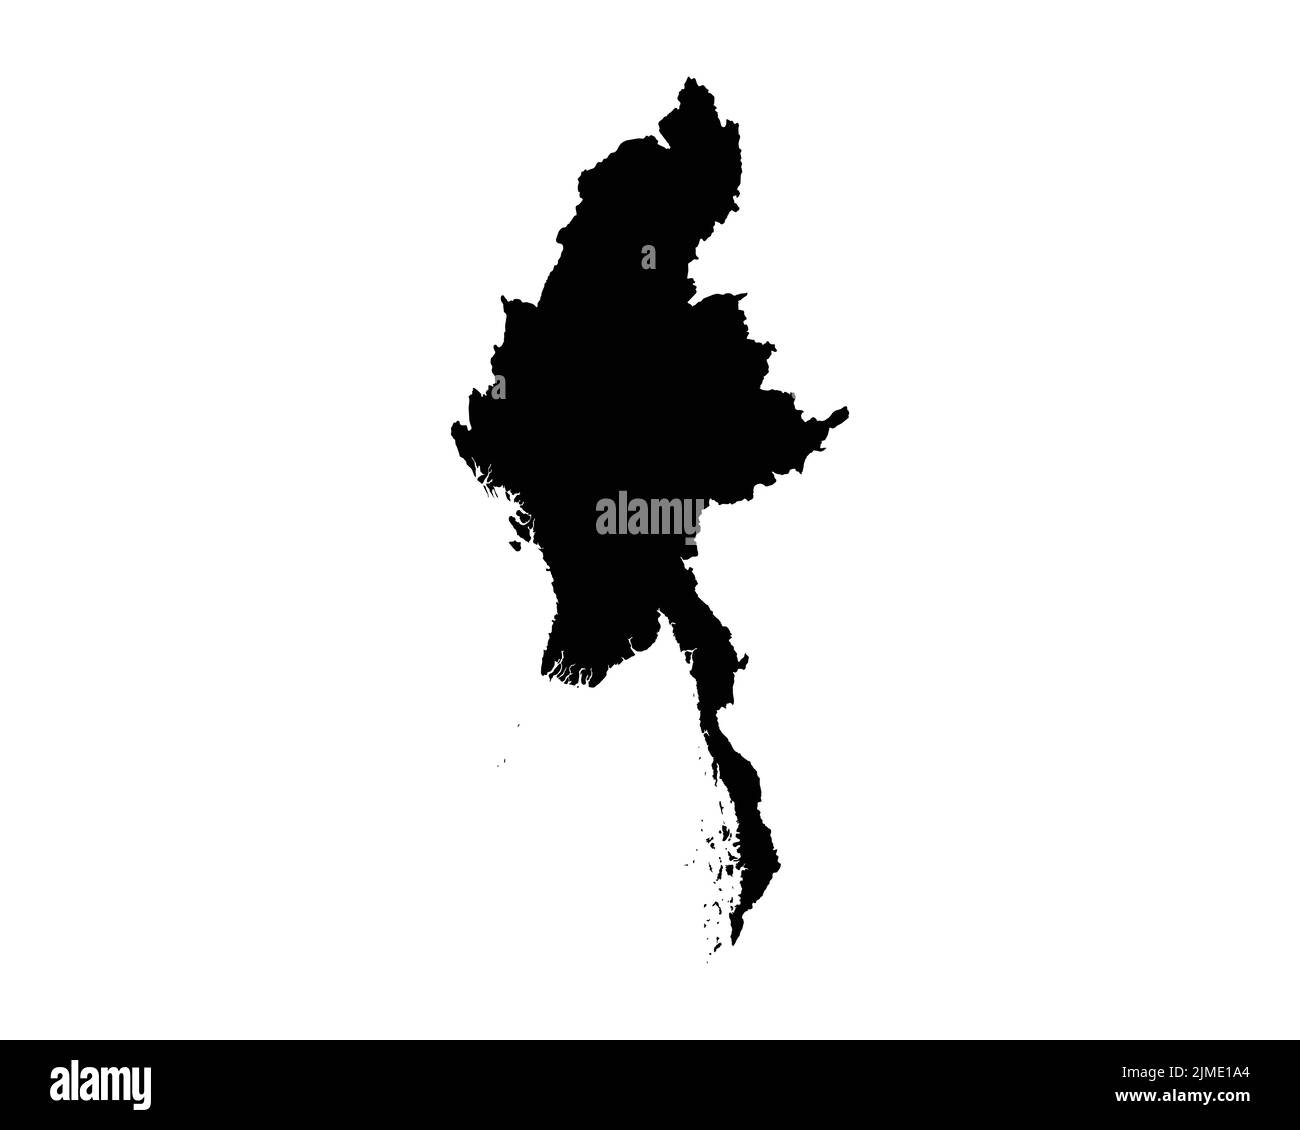 Myanmar-Karte. Burma-Landkarte. Schwarz-Weiß Burma National Nation Outline Geographie Grenze Grenzform Territorium Vektor Illustration EPS Clip Stock Vektor